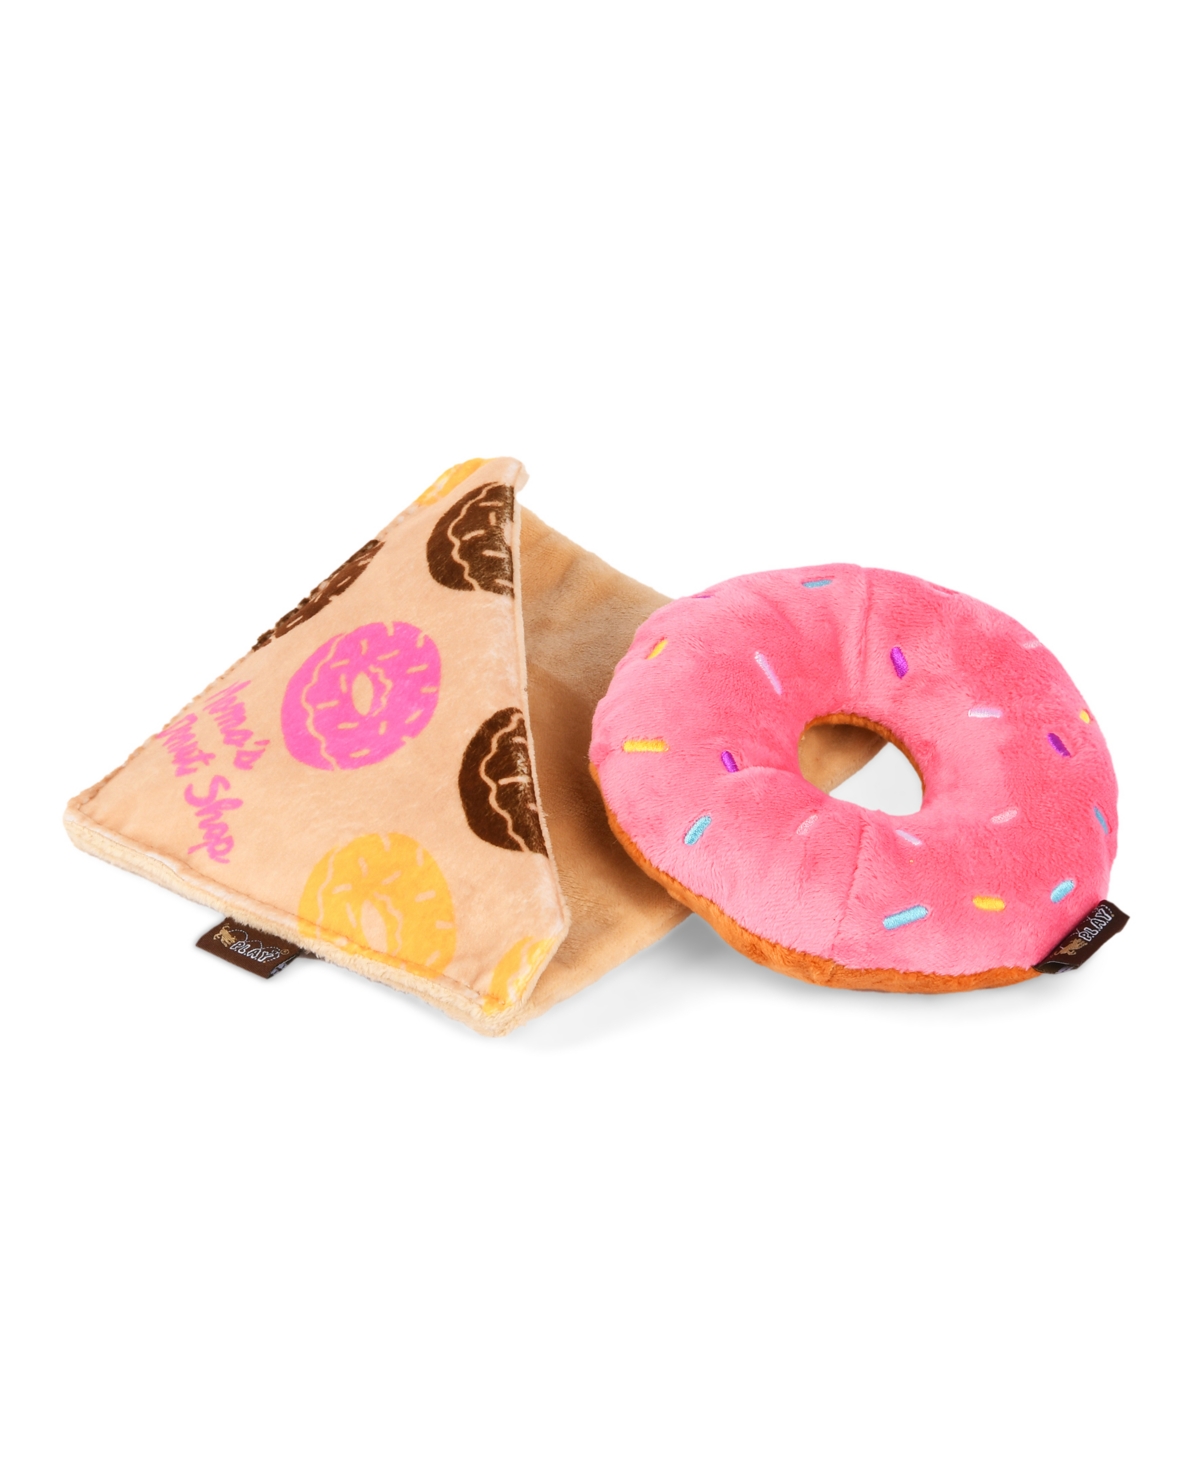 Doughboy Donut Plush Dog Toy - Pink